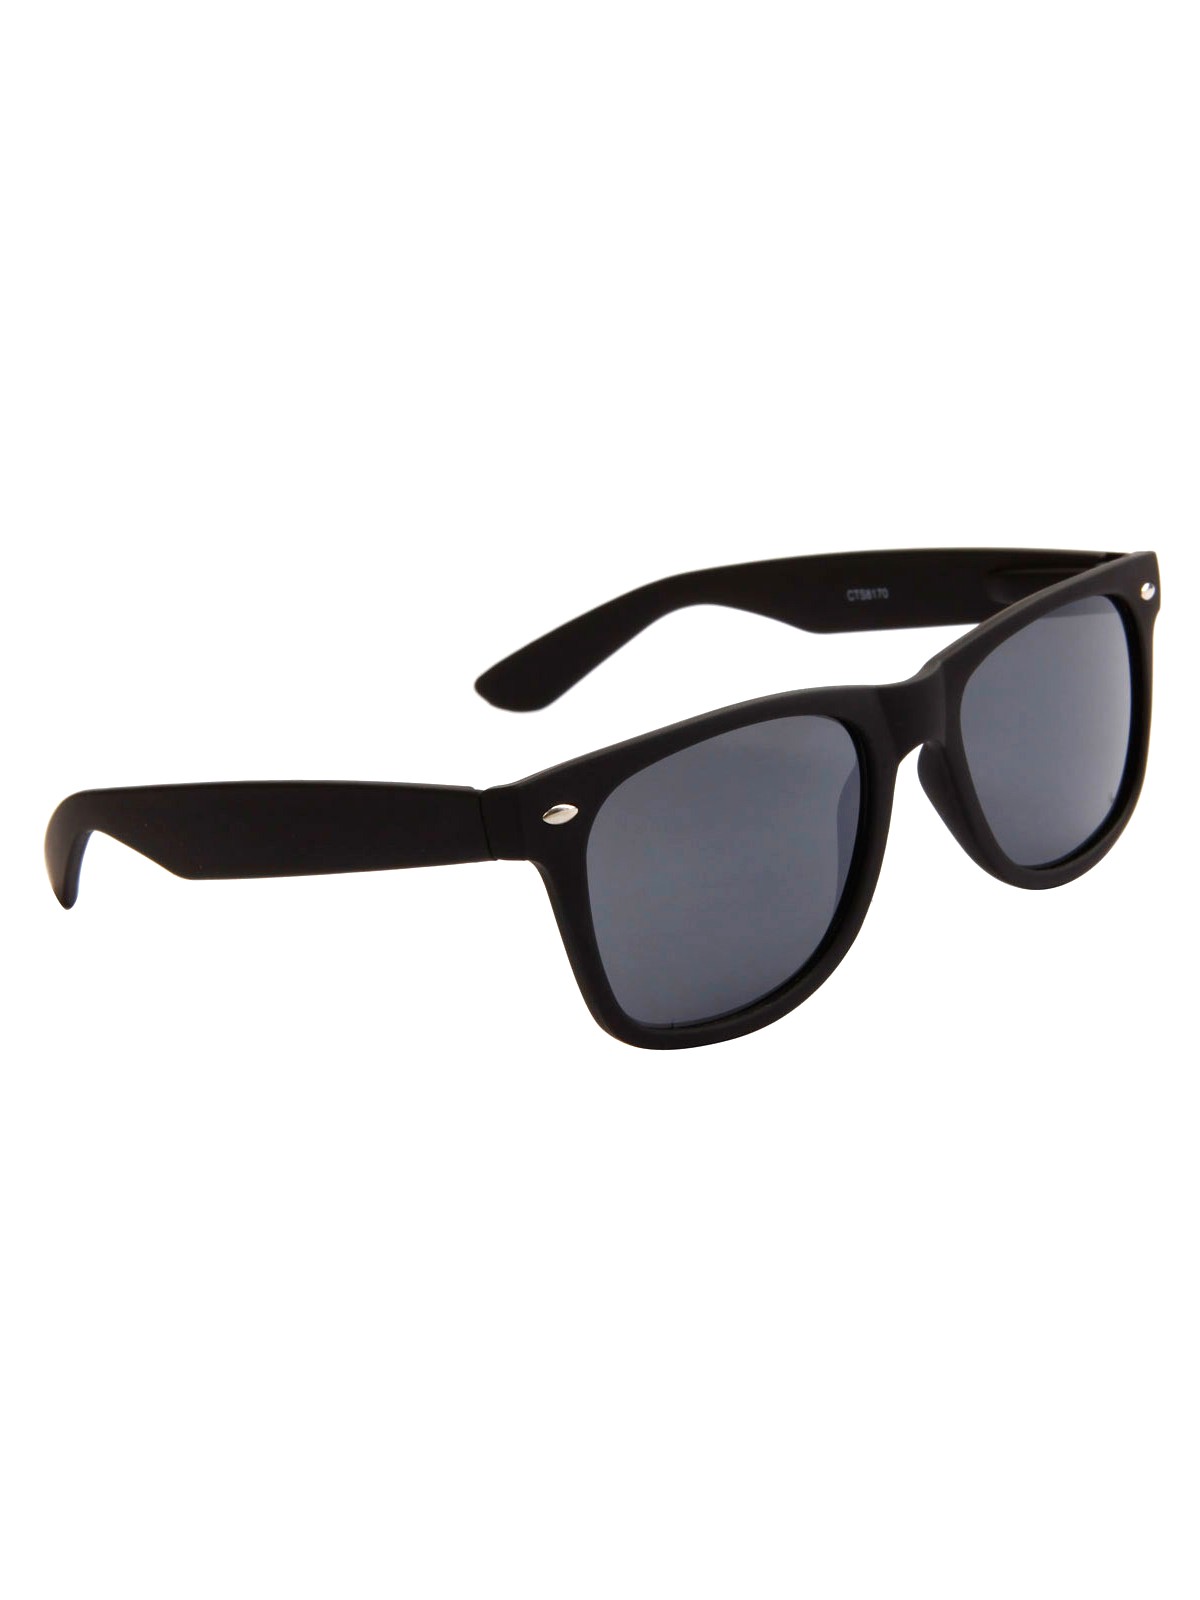 Super dark locs shades-dark locs hardcore sunglasses. – Locs Sunglasses-bdsngoinhaviet.com.vn